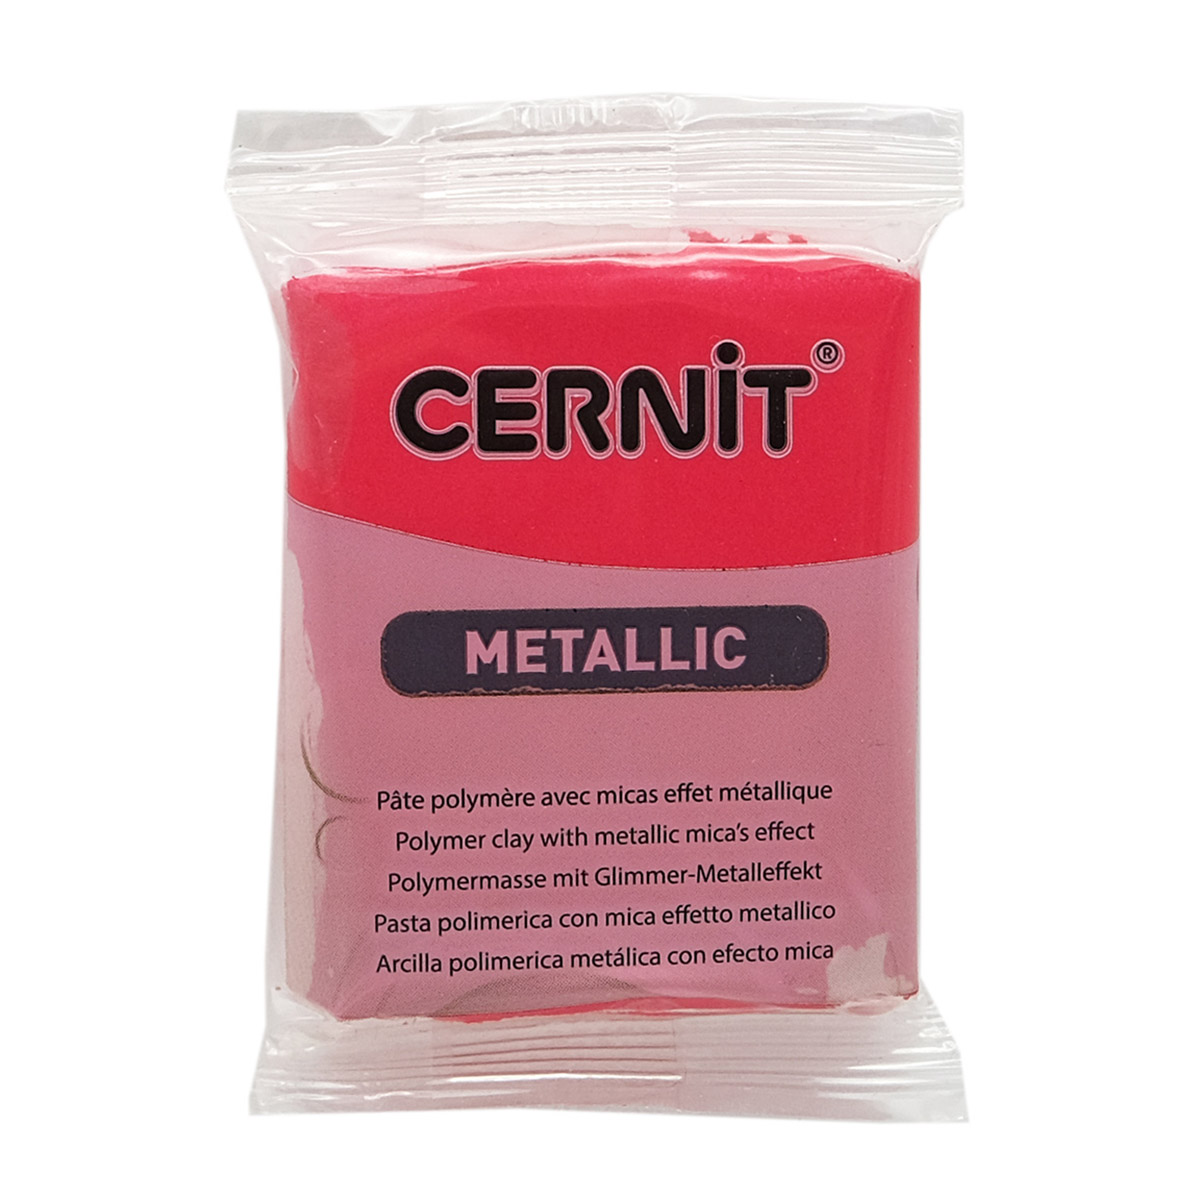 Пластика Cernit Metallic, 56 грамм, цвет 400 красный, арт. CE0870056